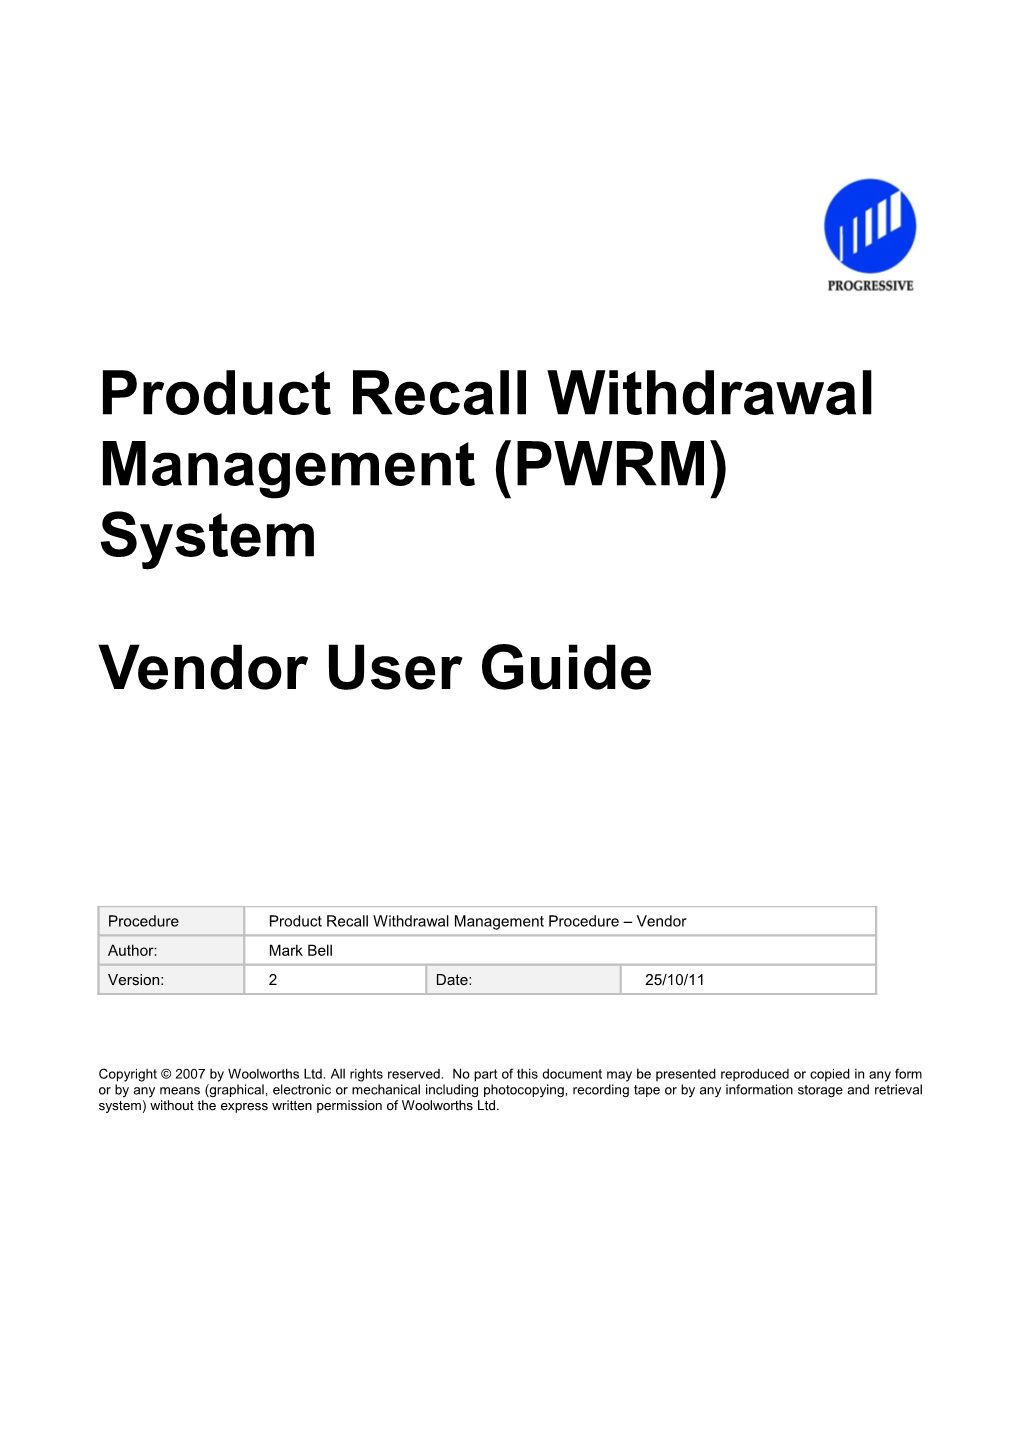 PWRM Vendor Notification